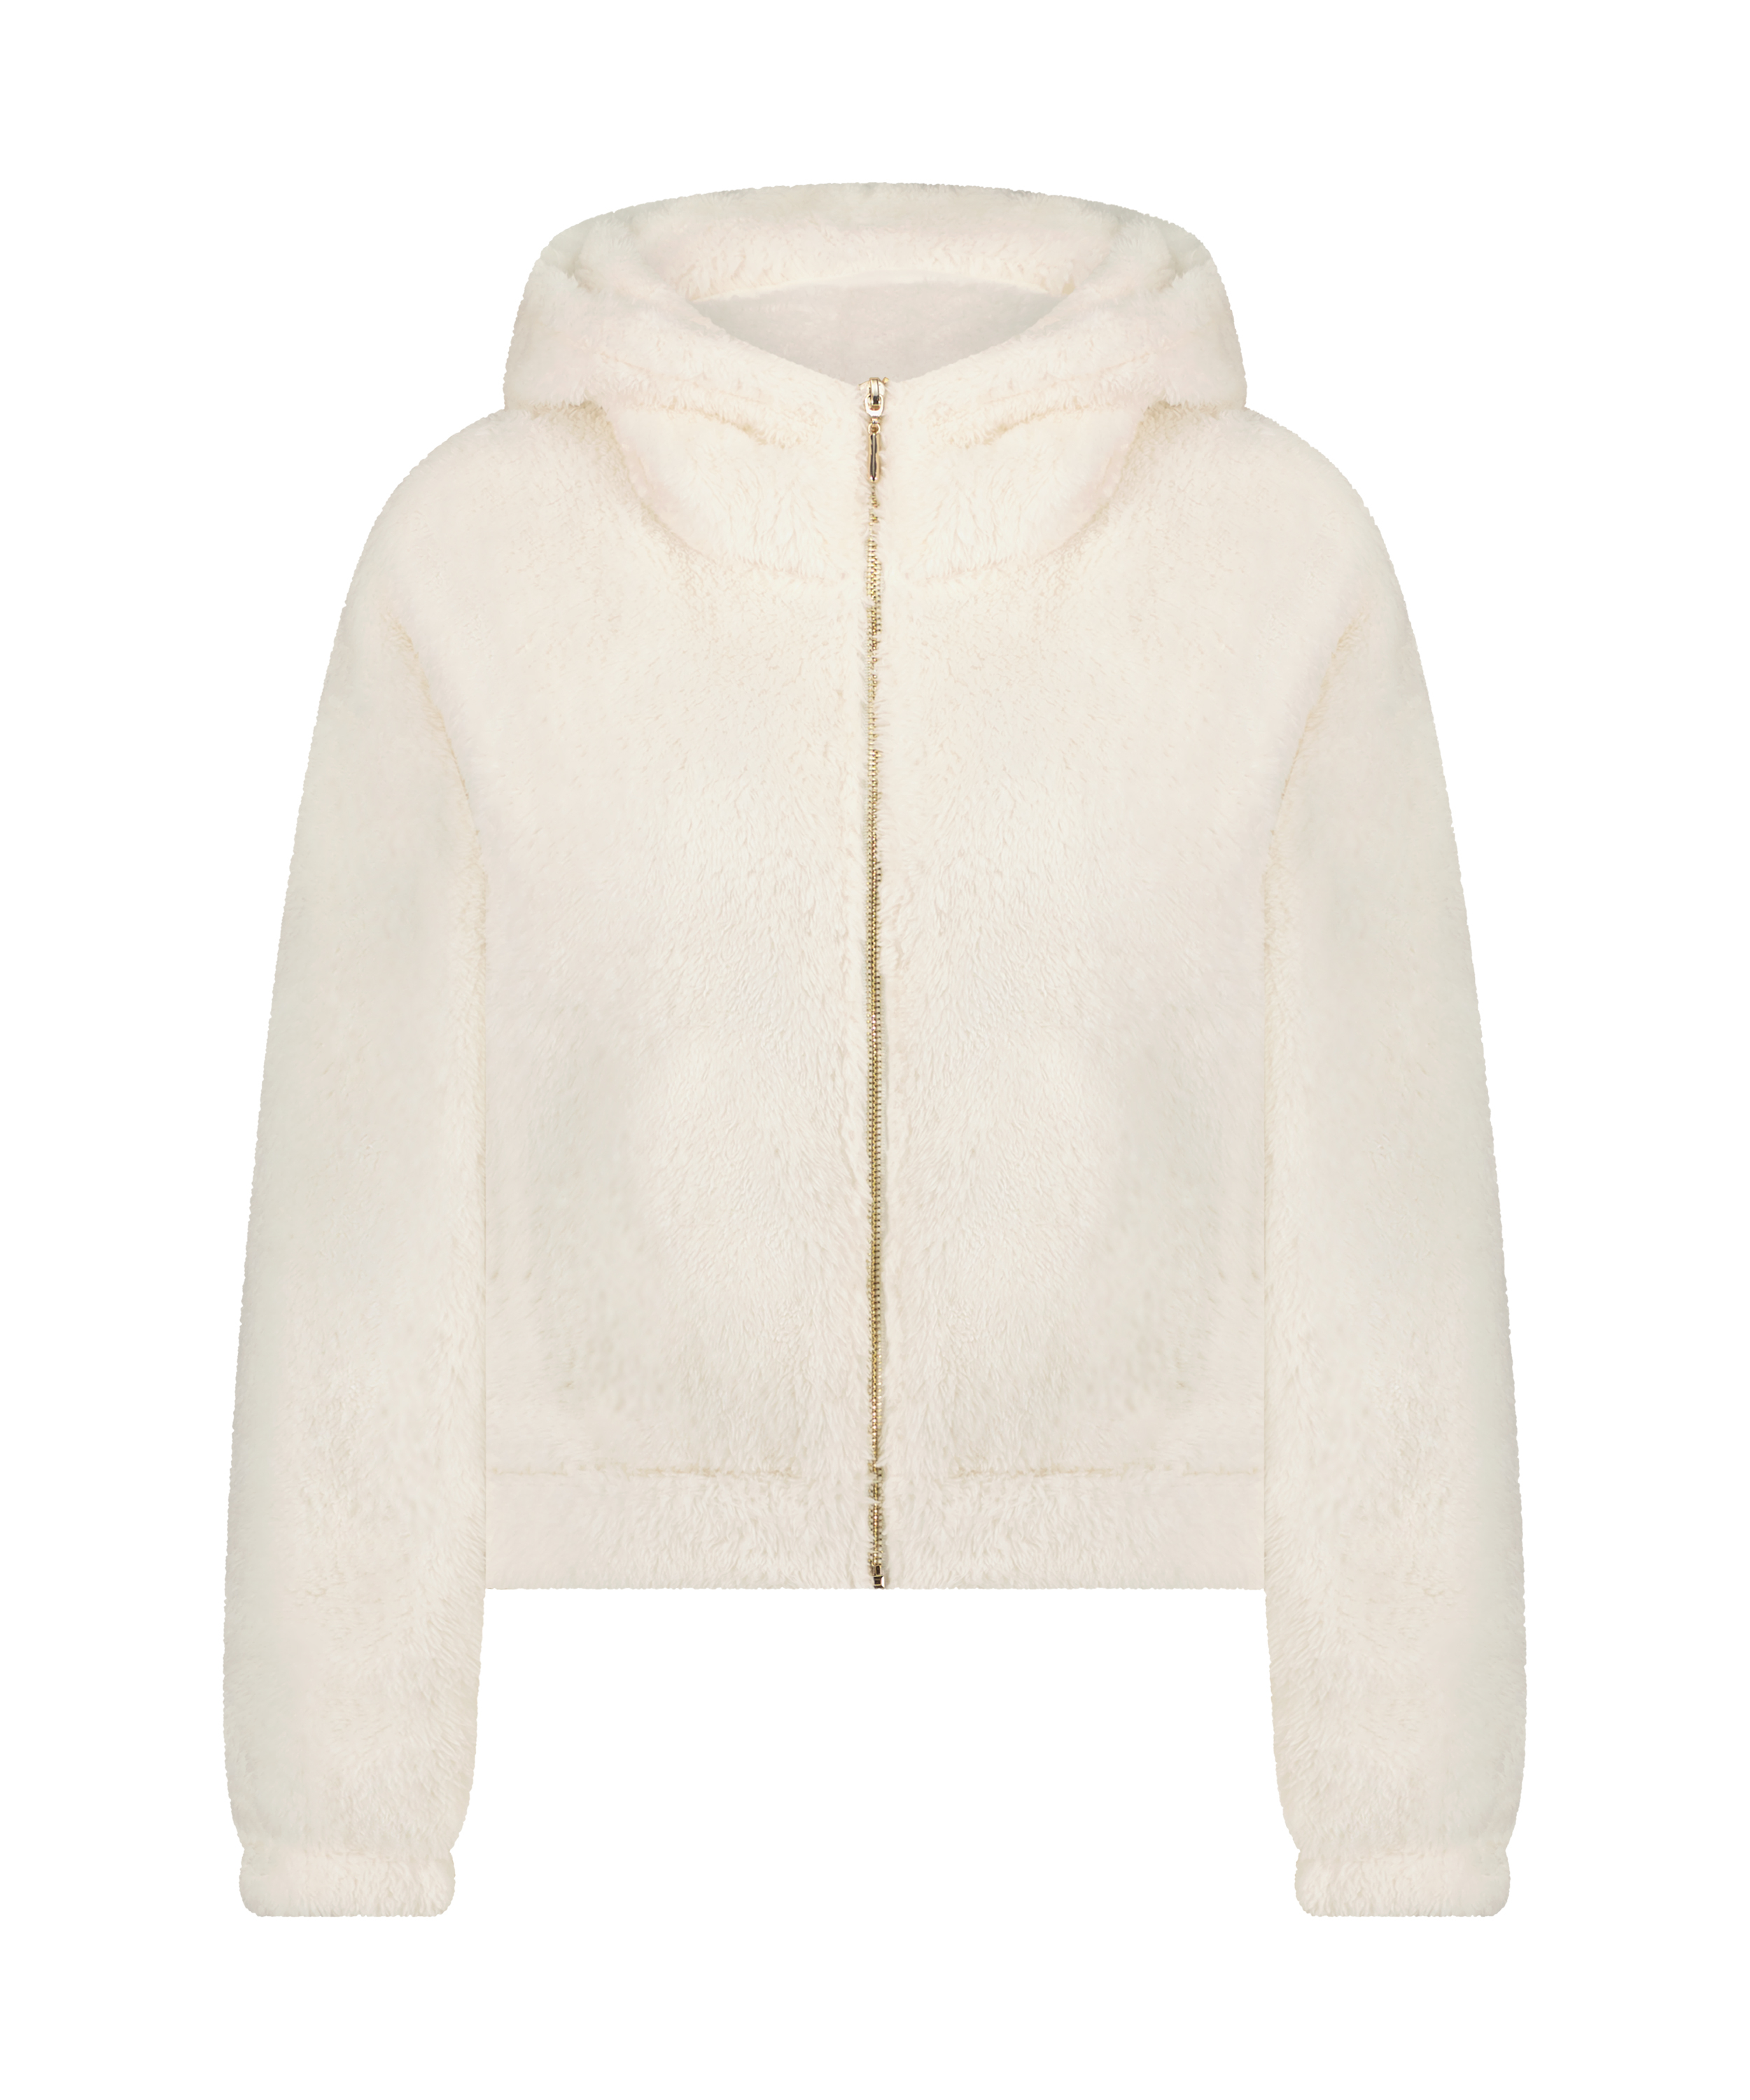 Fleece Jacket, White, main